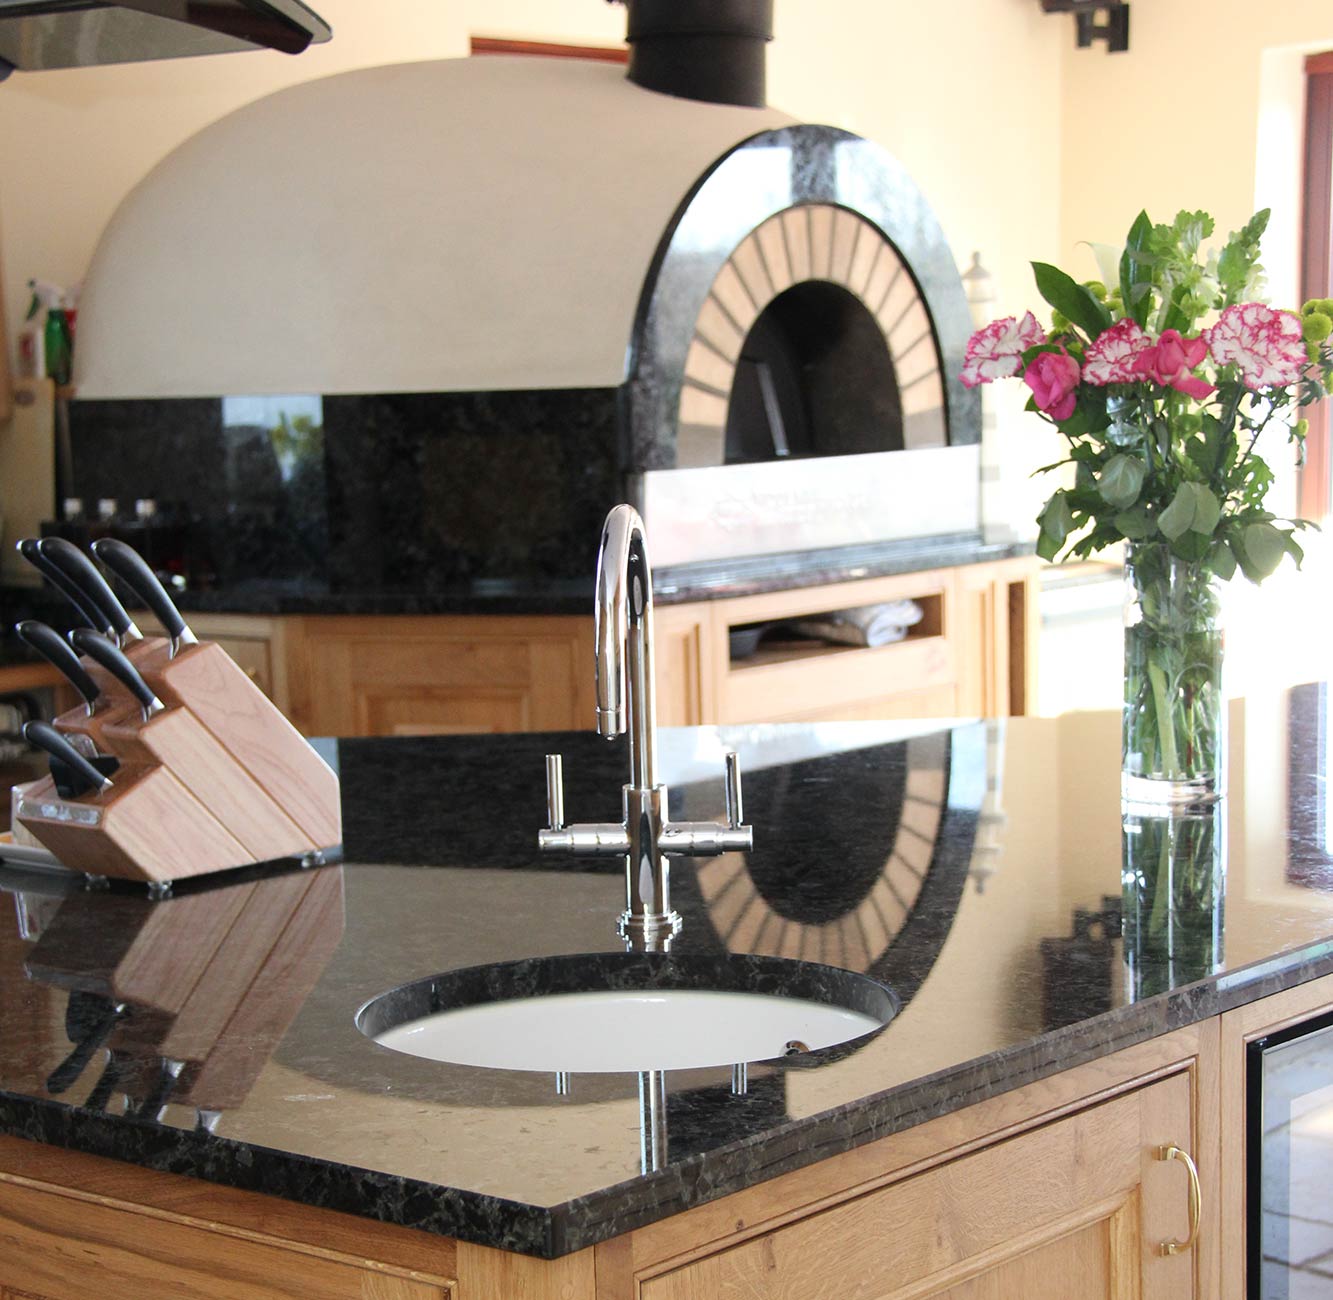 Frank Anthony Kitchens Handbuilt Wells Oak Pizza Oven Stunning